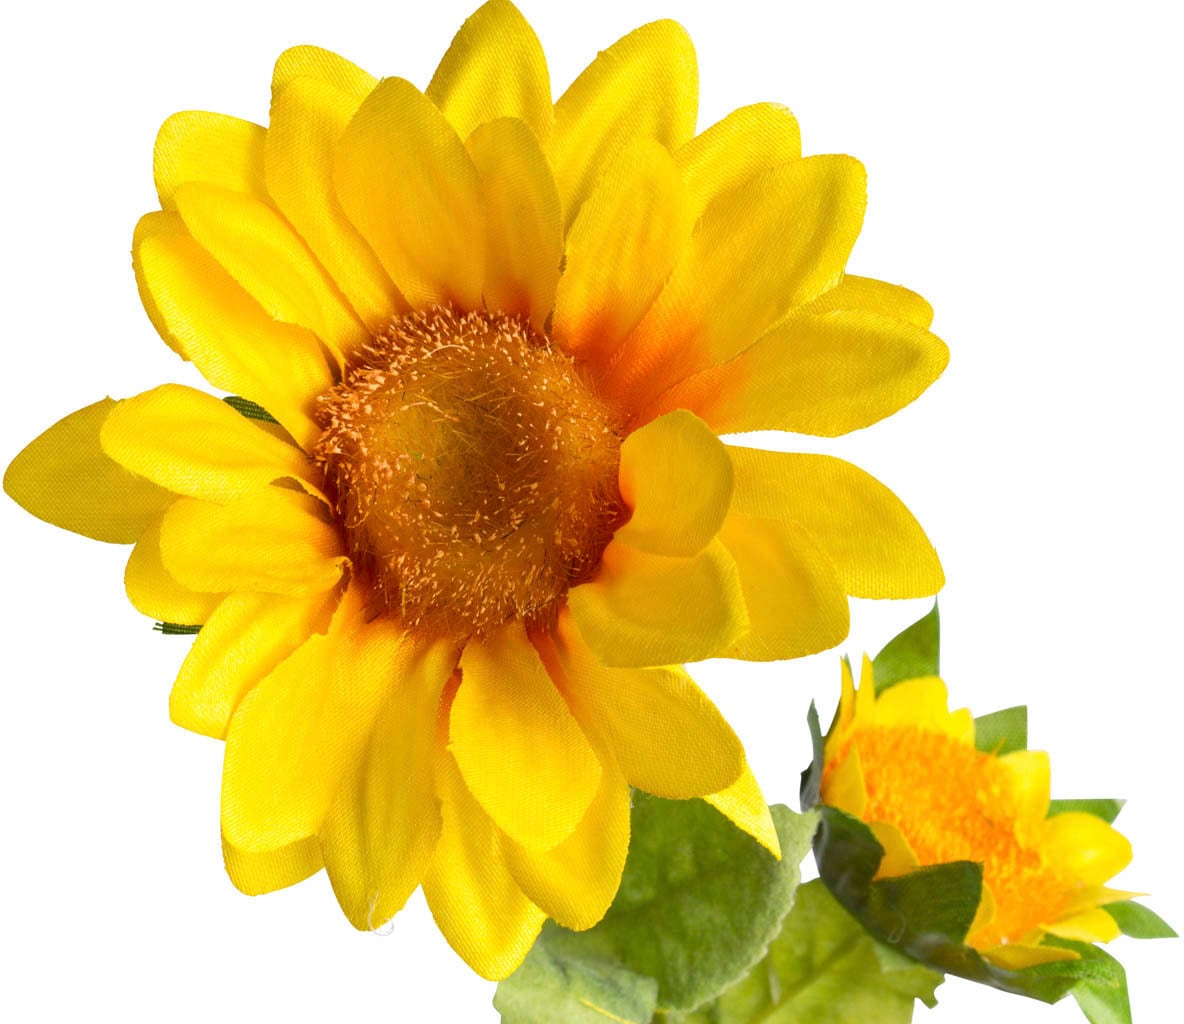 Botanic-Haus Kunstblume »Sonnenblume mit 2 Stielen«